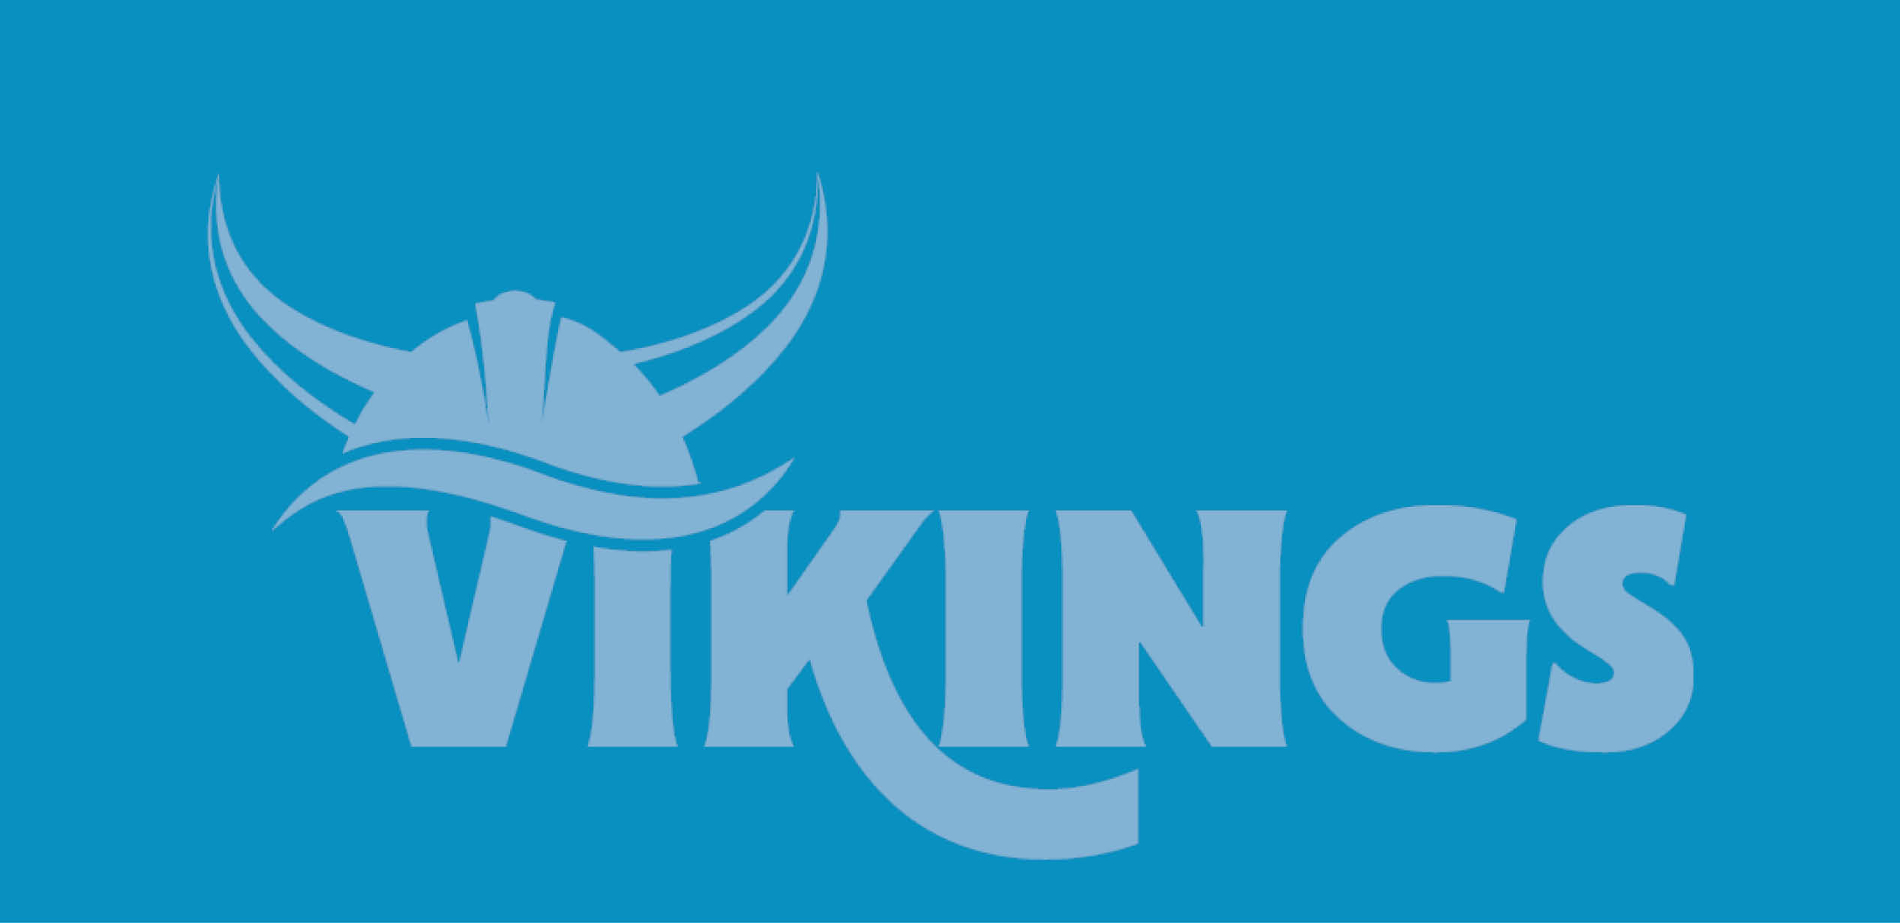 Vikings spirit symbol graphic